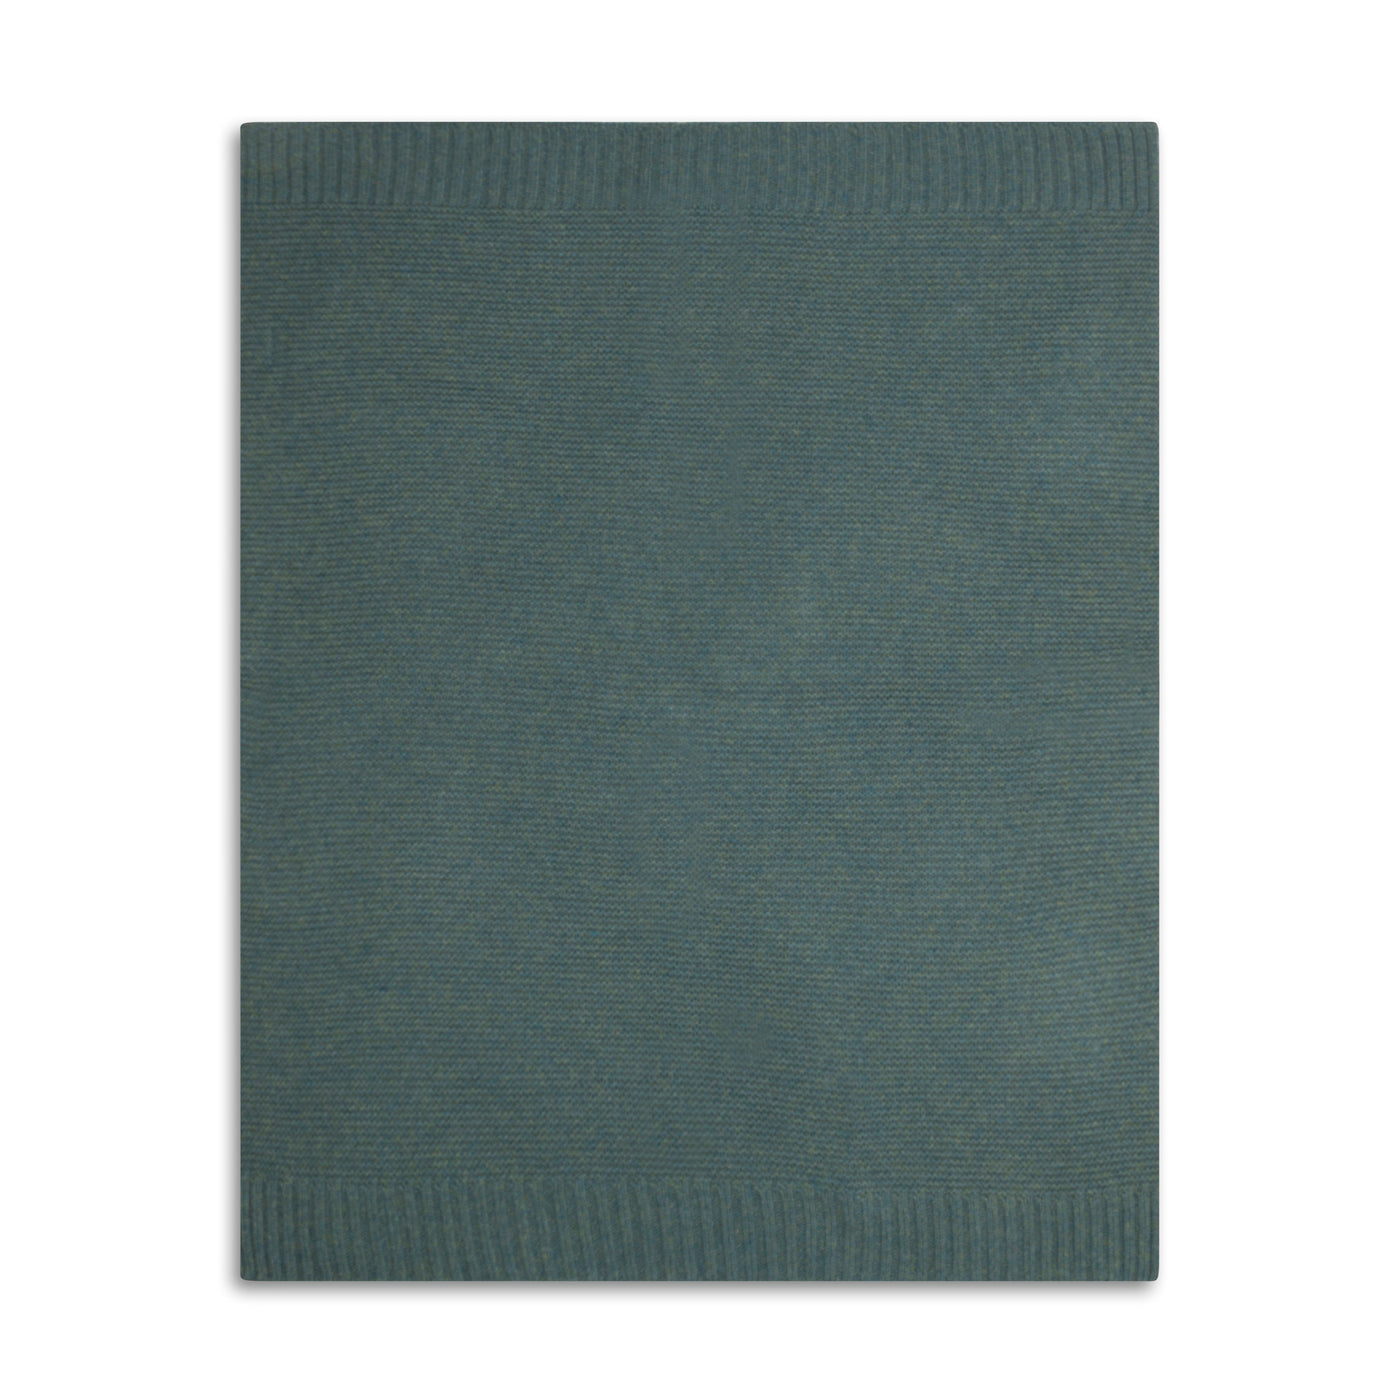 Blanket#1 Emerald Blue